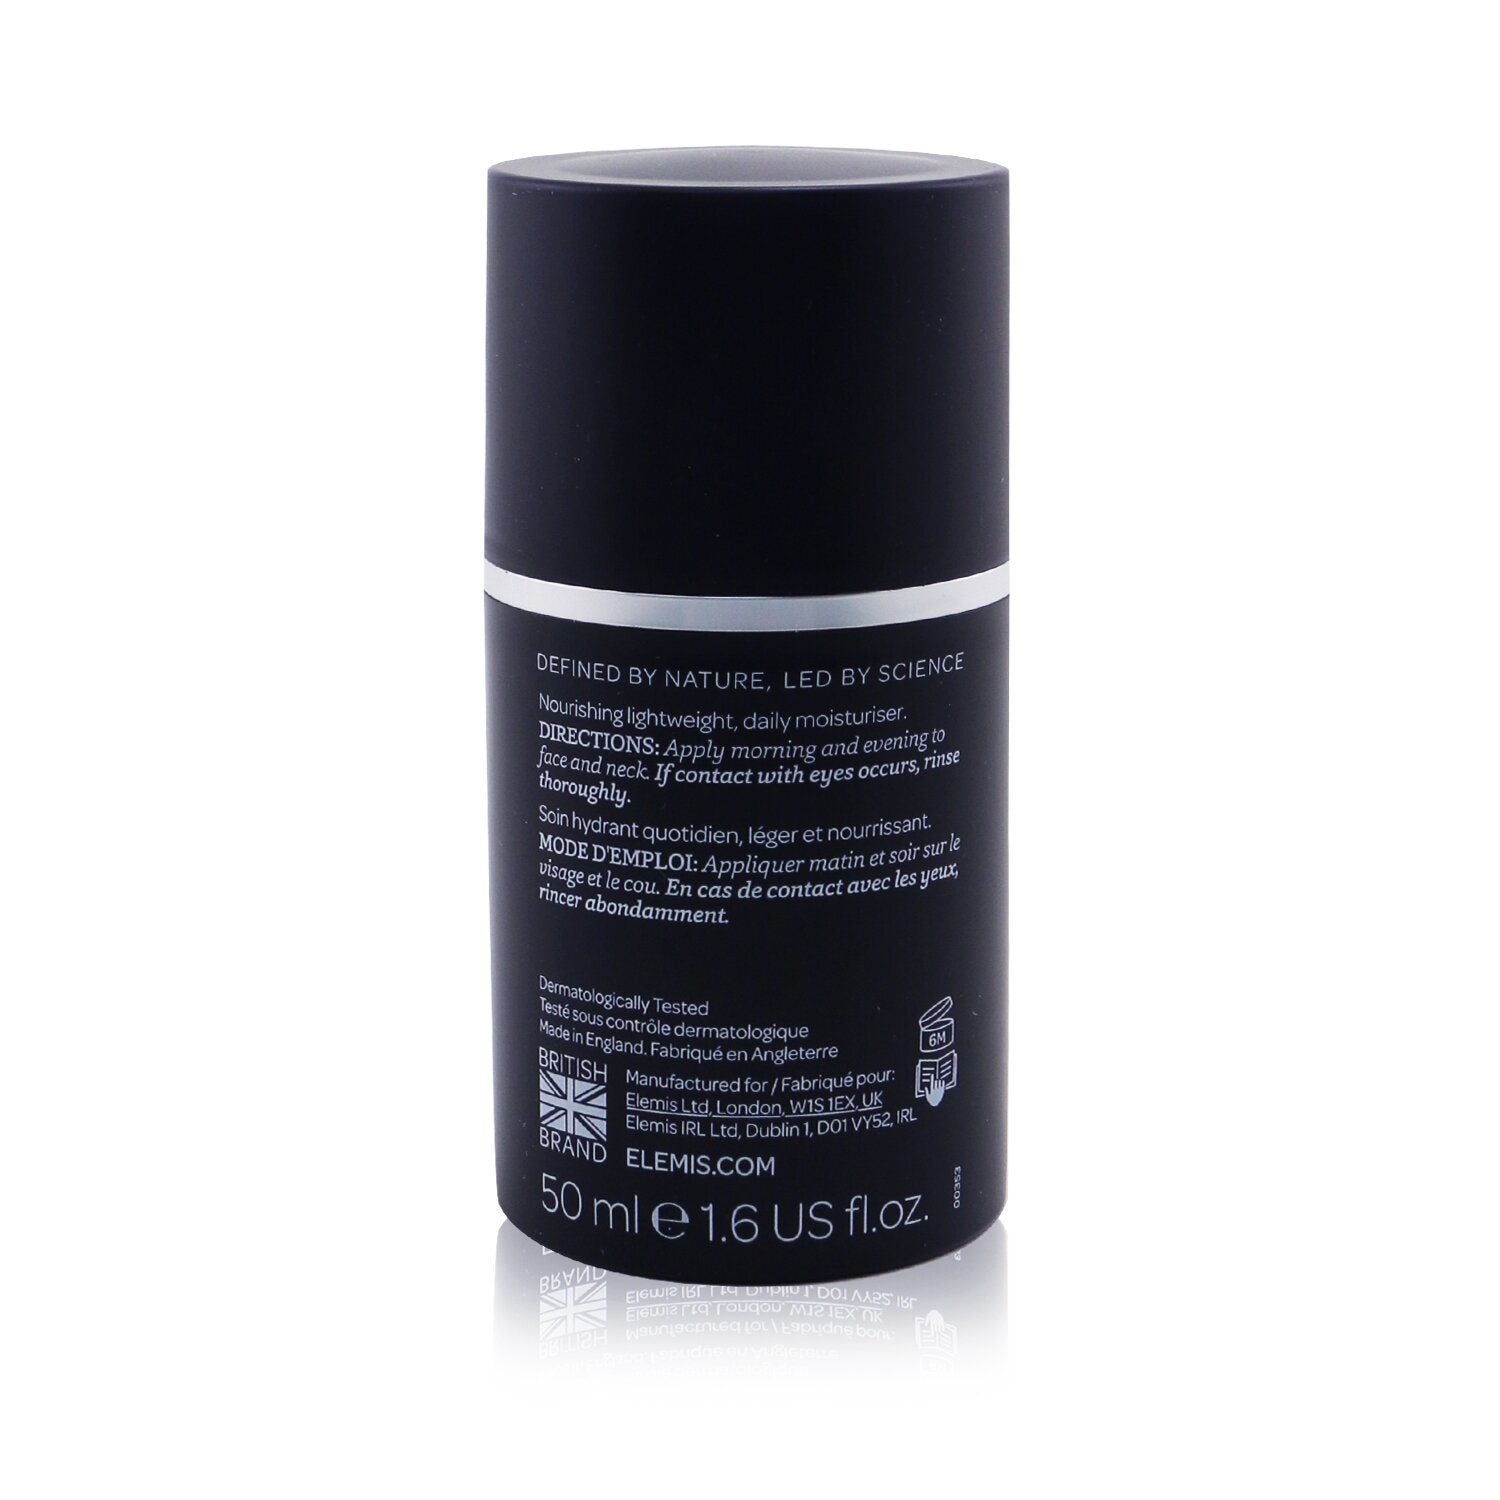 Elemis - Daily Moisture Boost - 50ml/1.7oz is a lightweight moisturizer for men's skin.